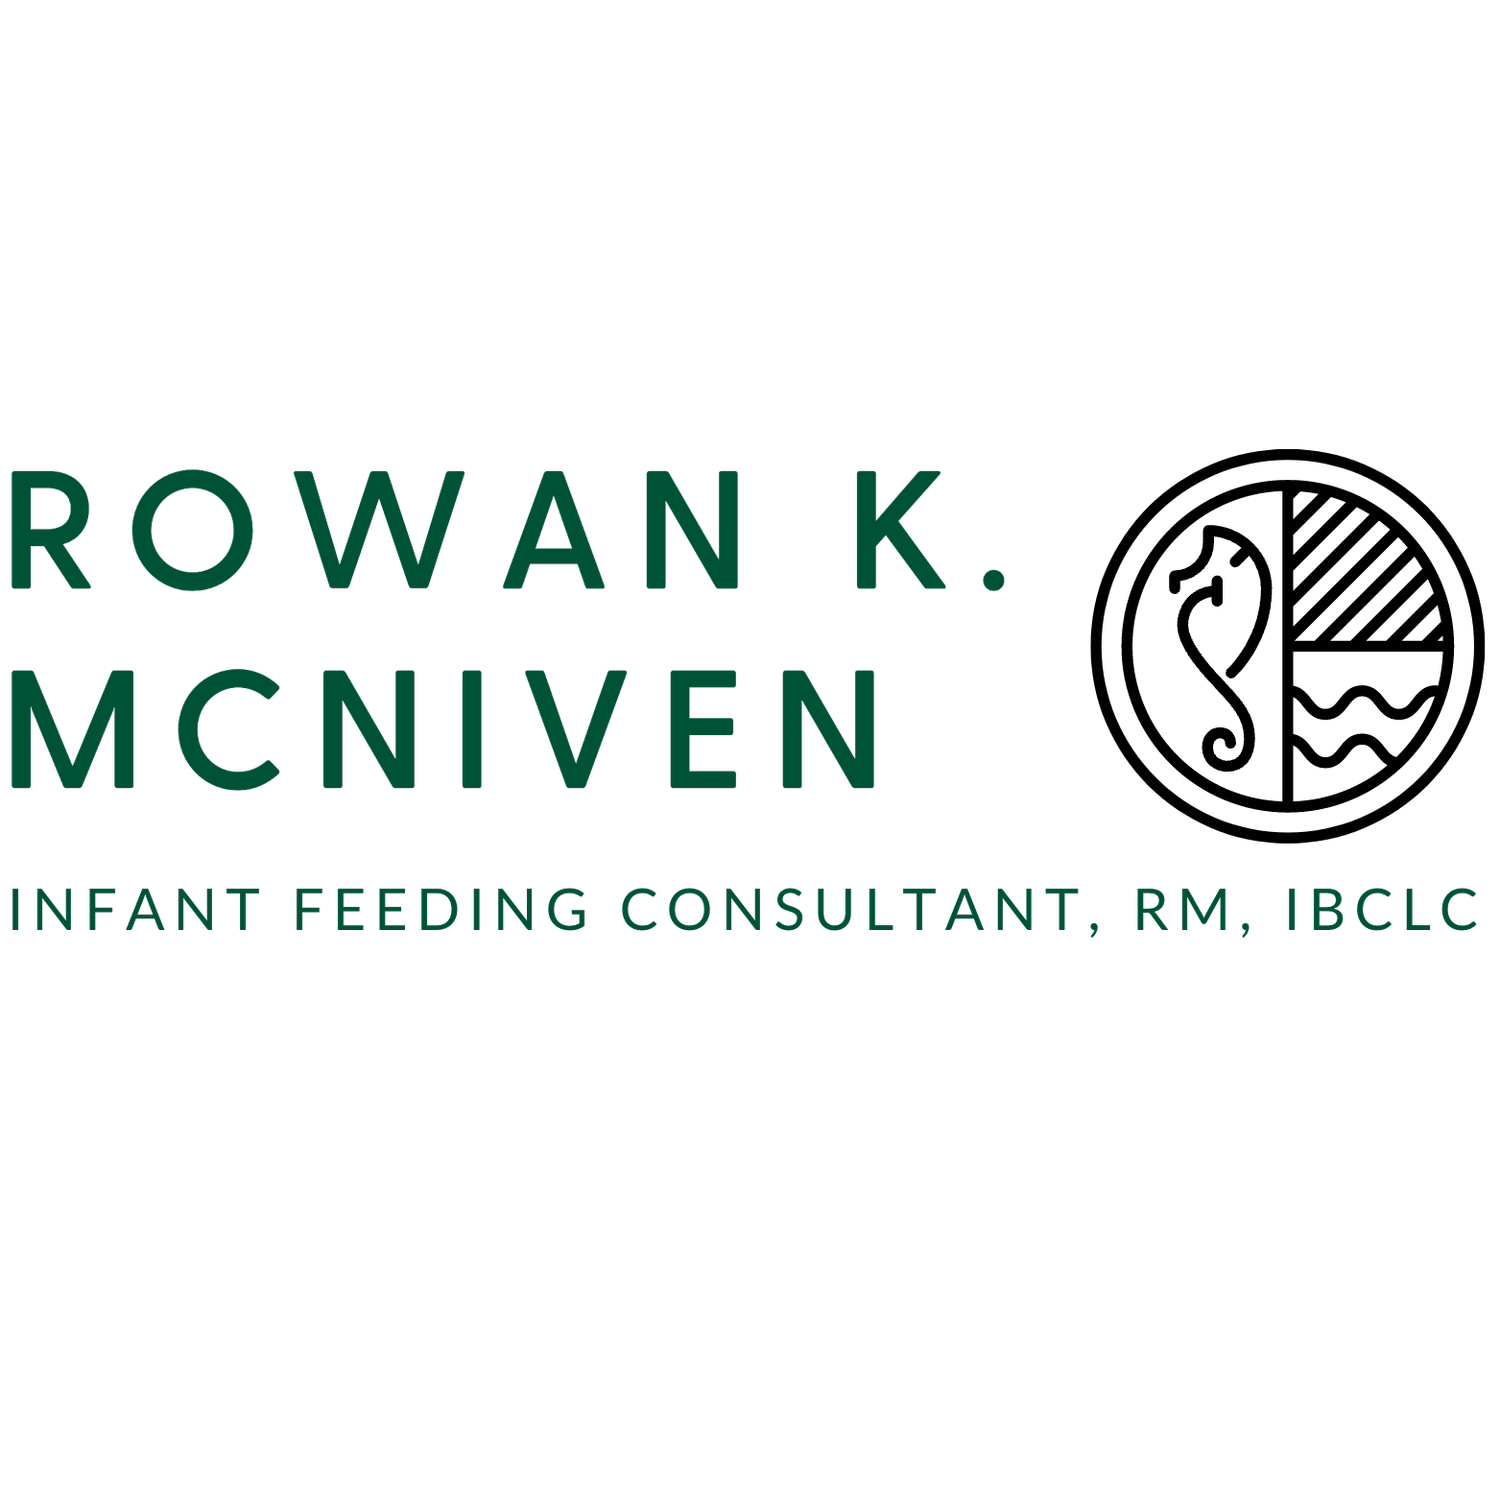 Rowan K. McNiven Infant Feeding Consultant, RM, IBCLC